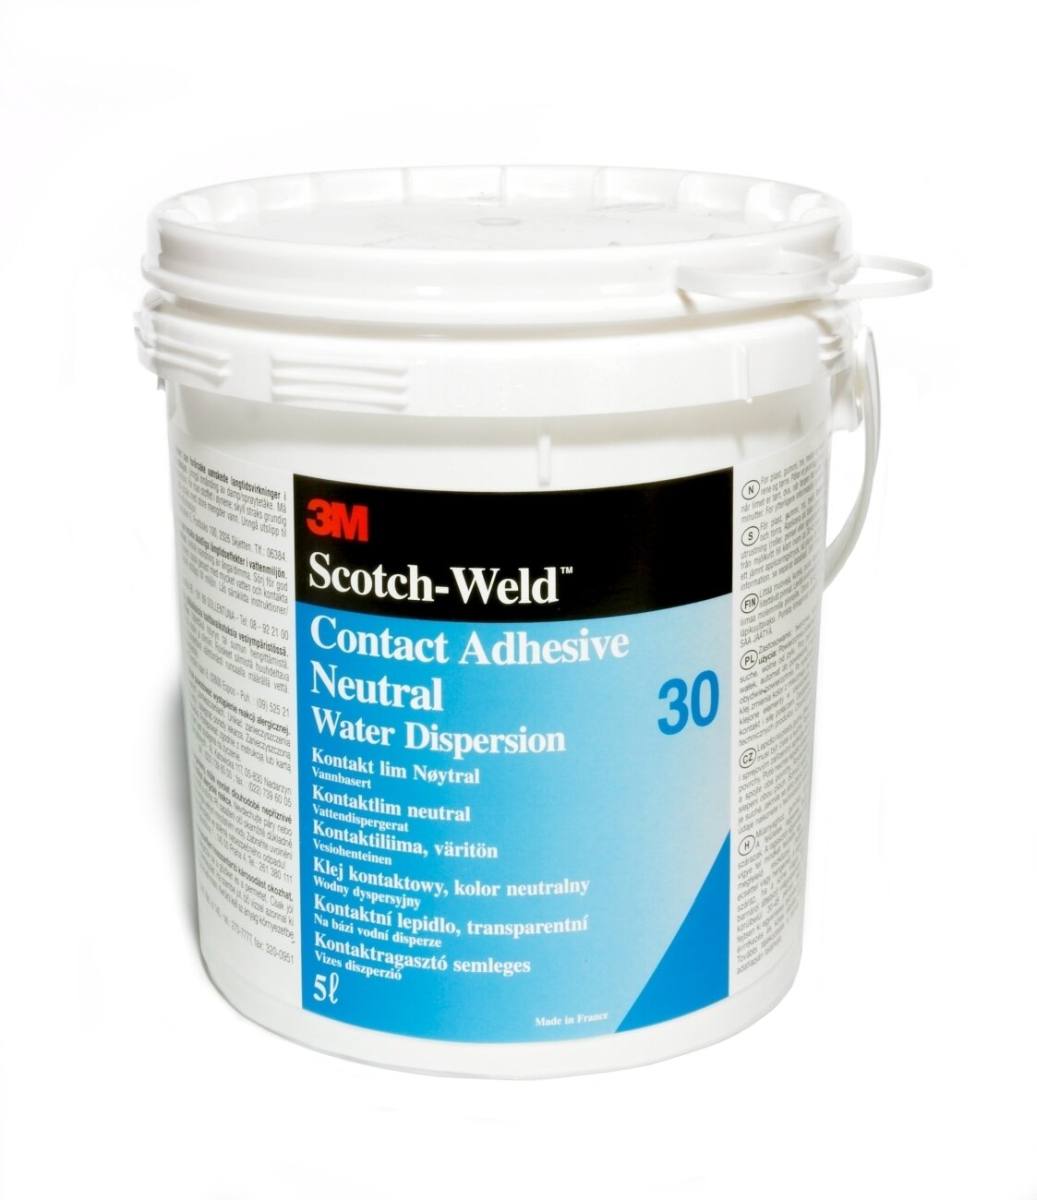 3M Scotch-Weld Dispersionsklebstoff auf Polychloroprenbasis 30 NF, Transparent, 5 Liter